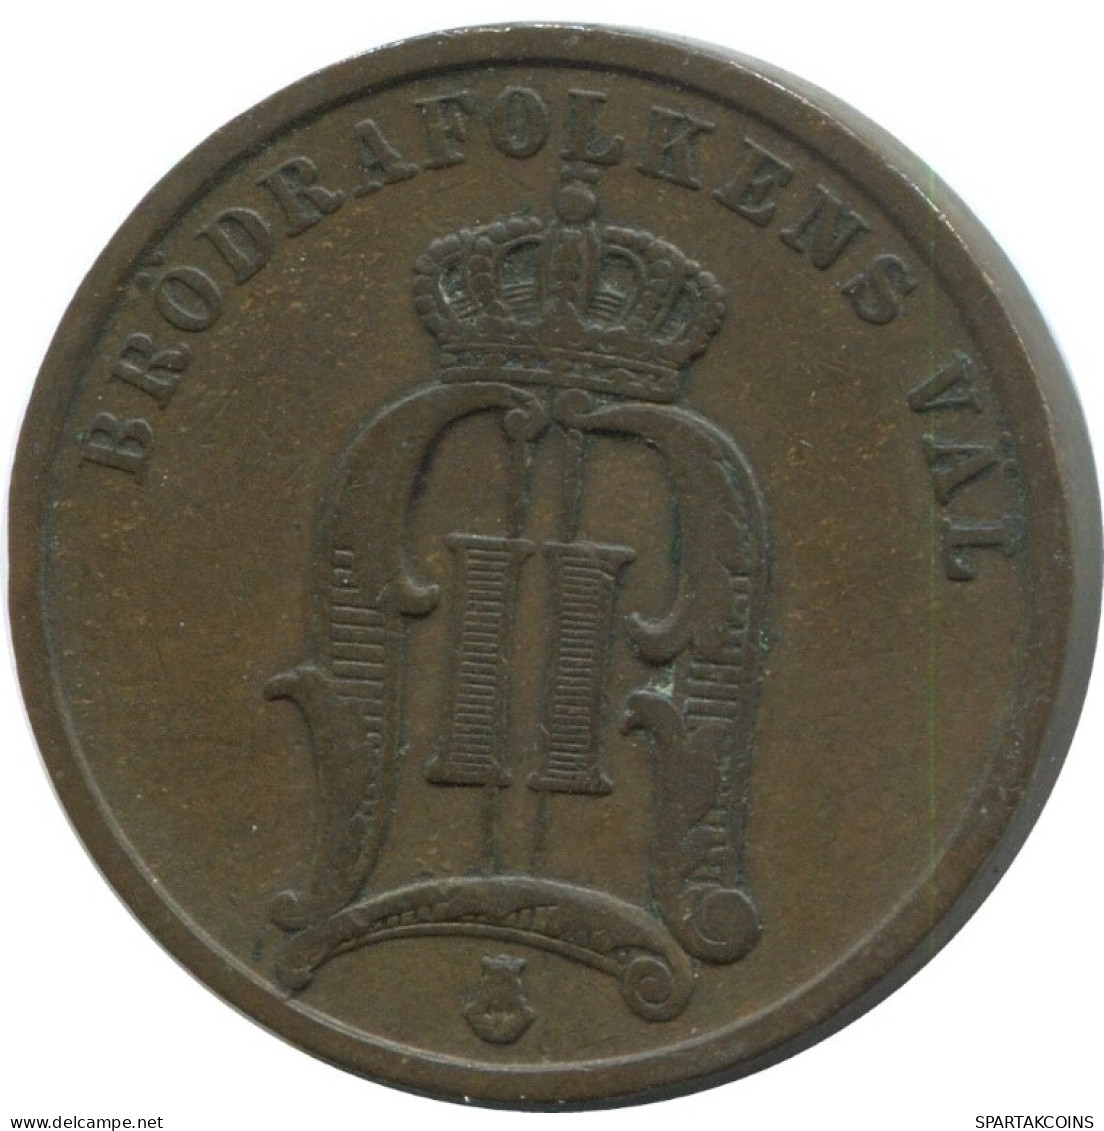 2 ORE 1898 SWEDEN Coin #AD005.2.U.A - Sweden